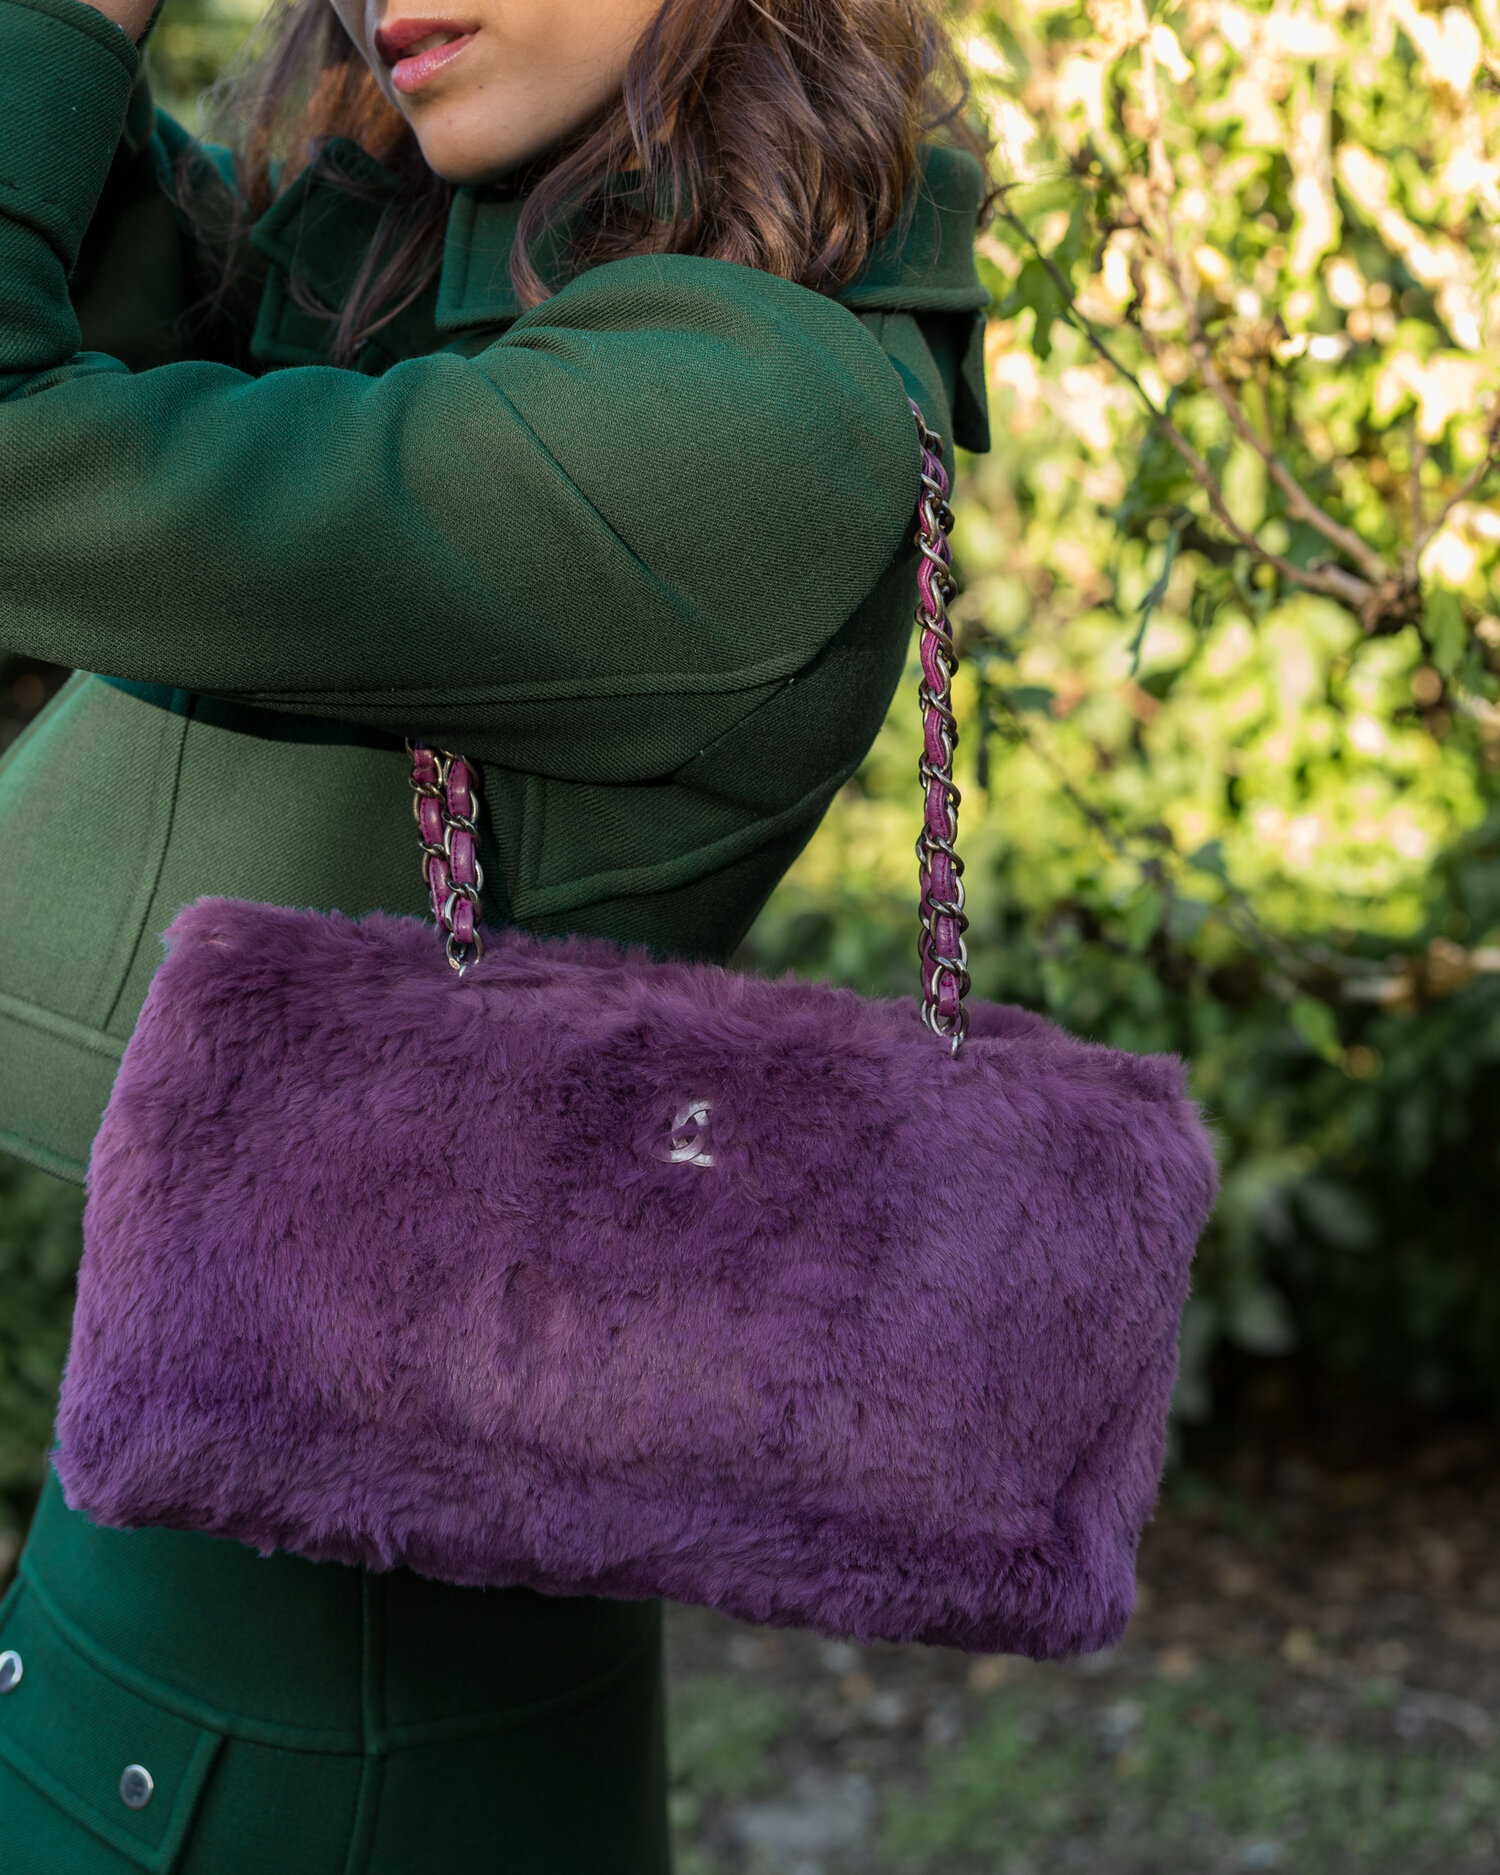 chanel purple crossbody purse